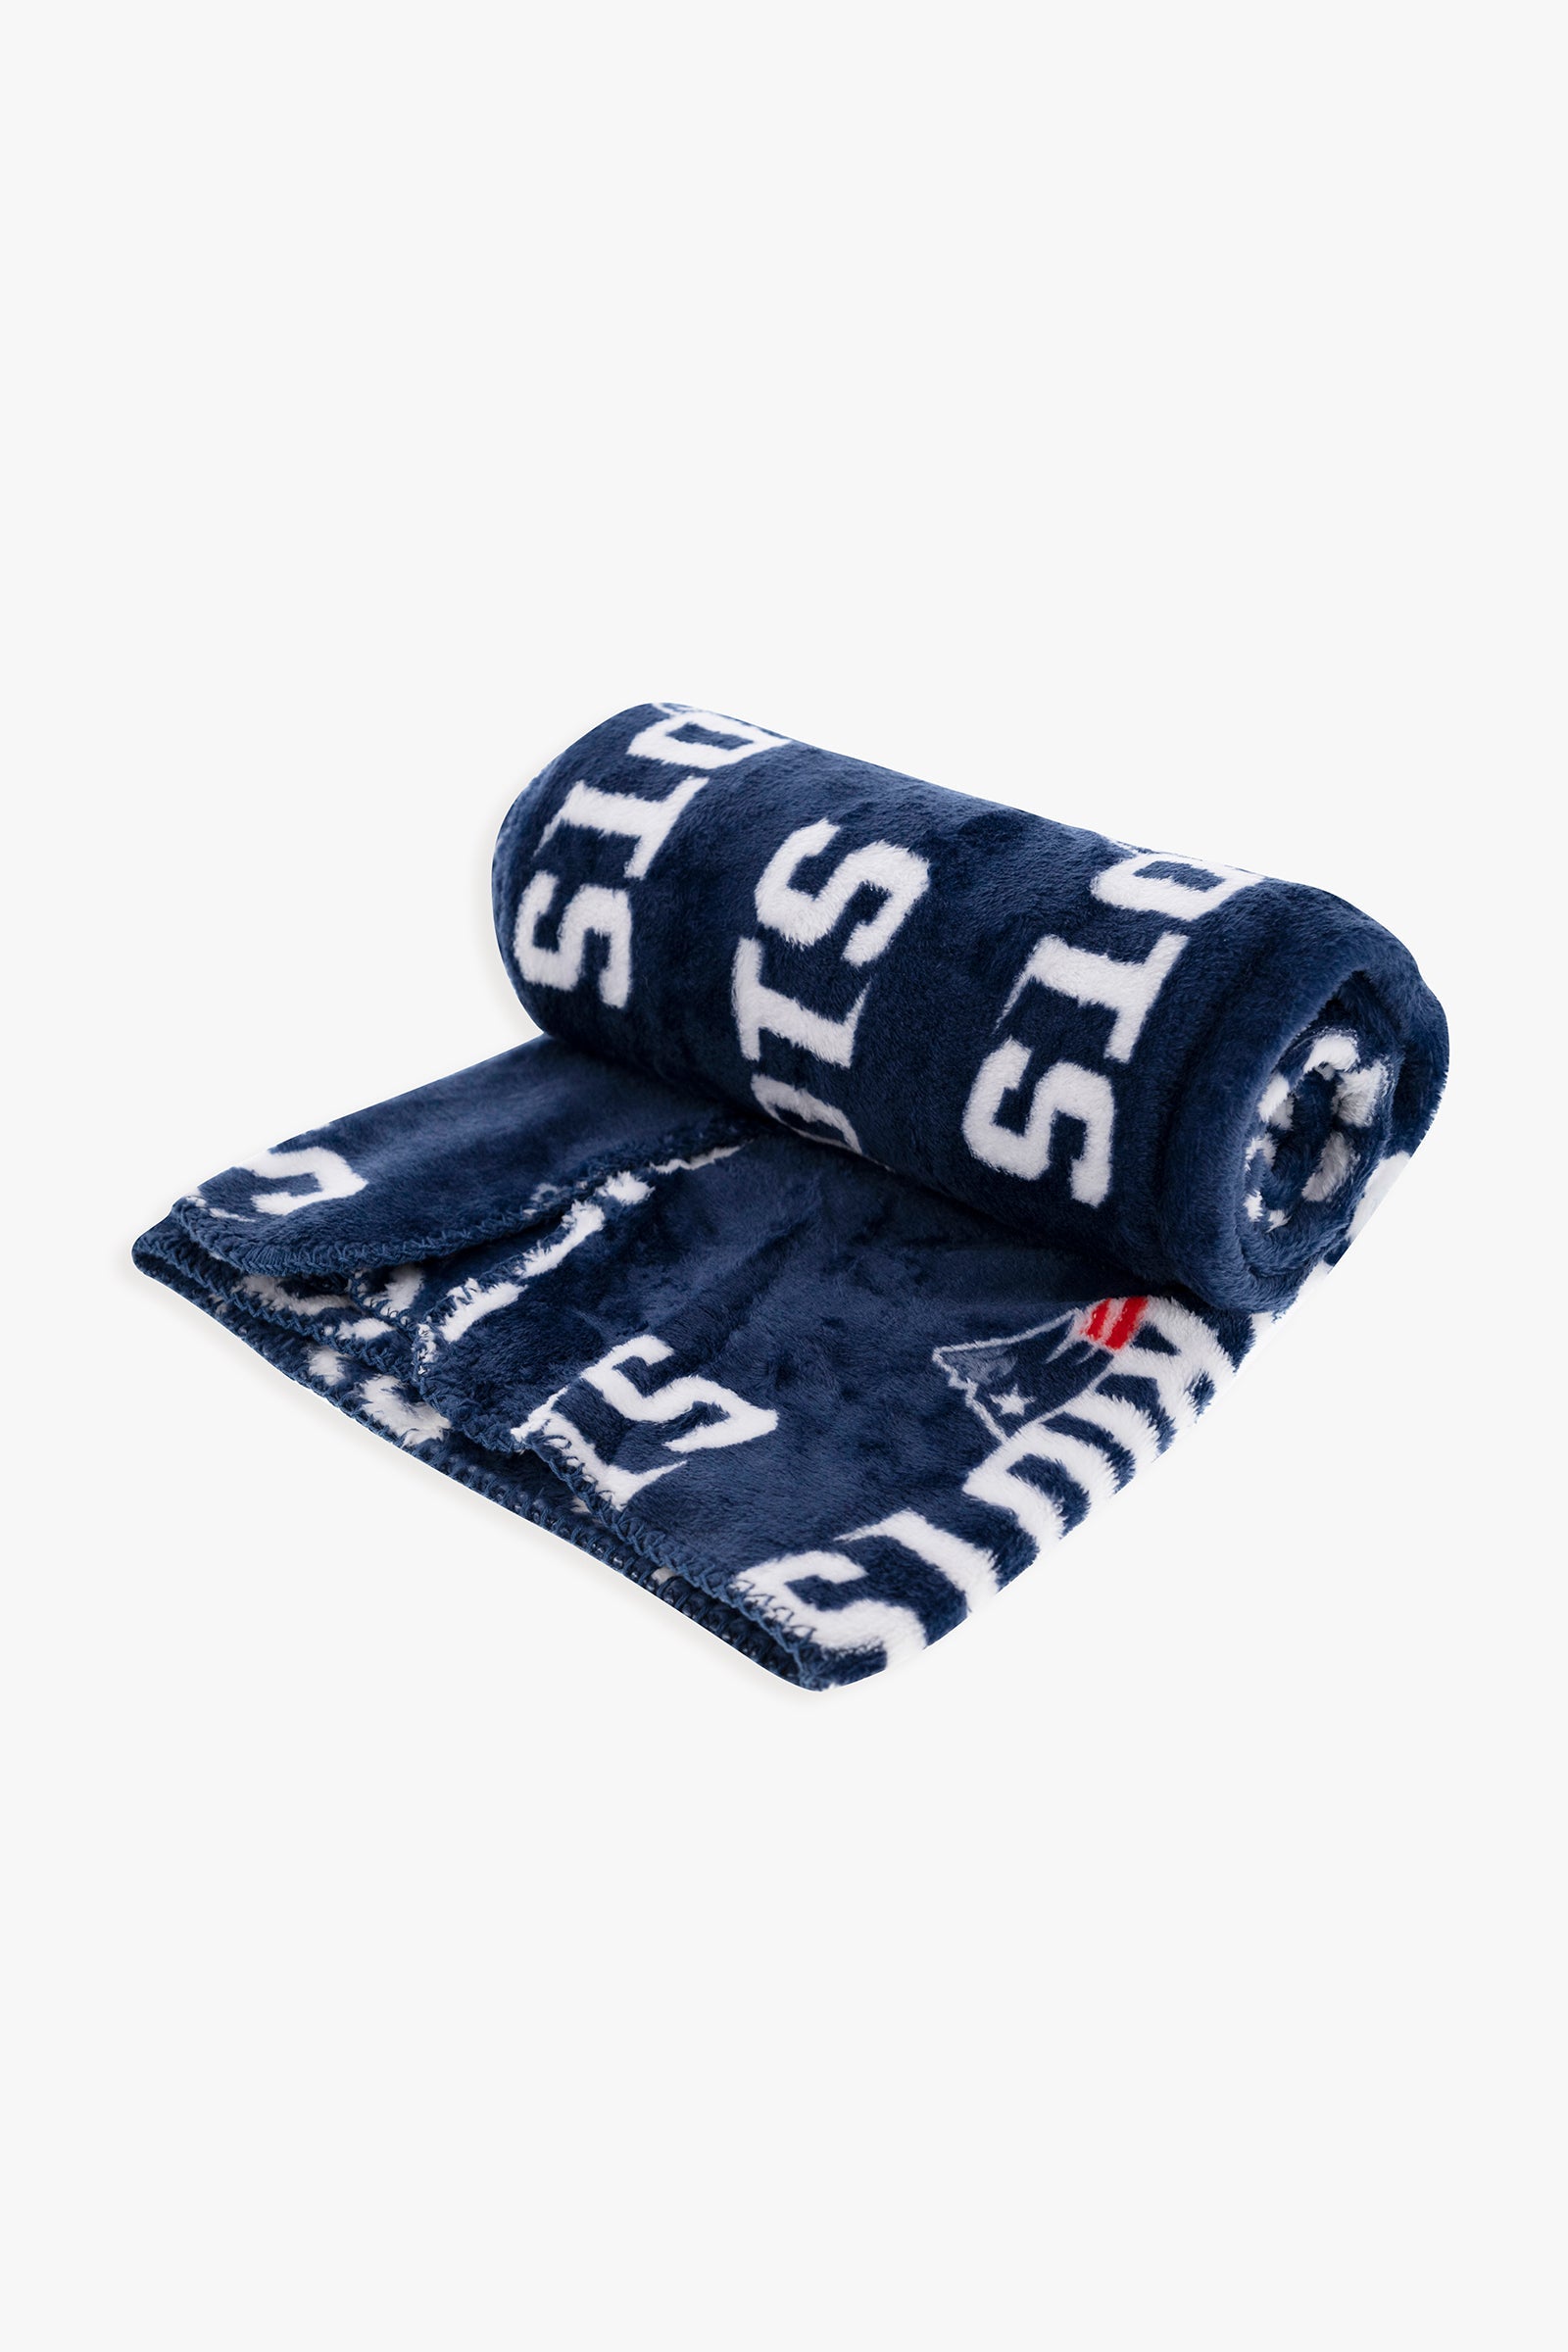 Gertex NFL Coral Fleece Travel Throw Blanket with Team Logos | 150cm x 120cm (59" x 47")